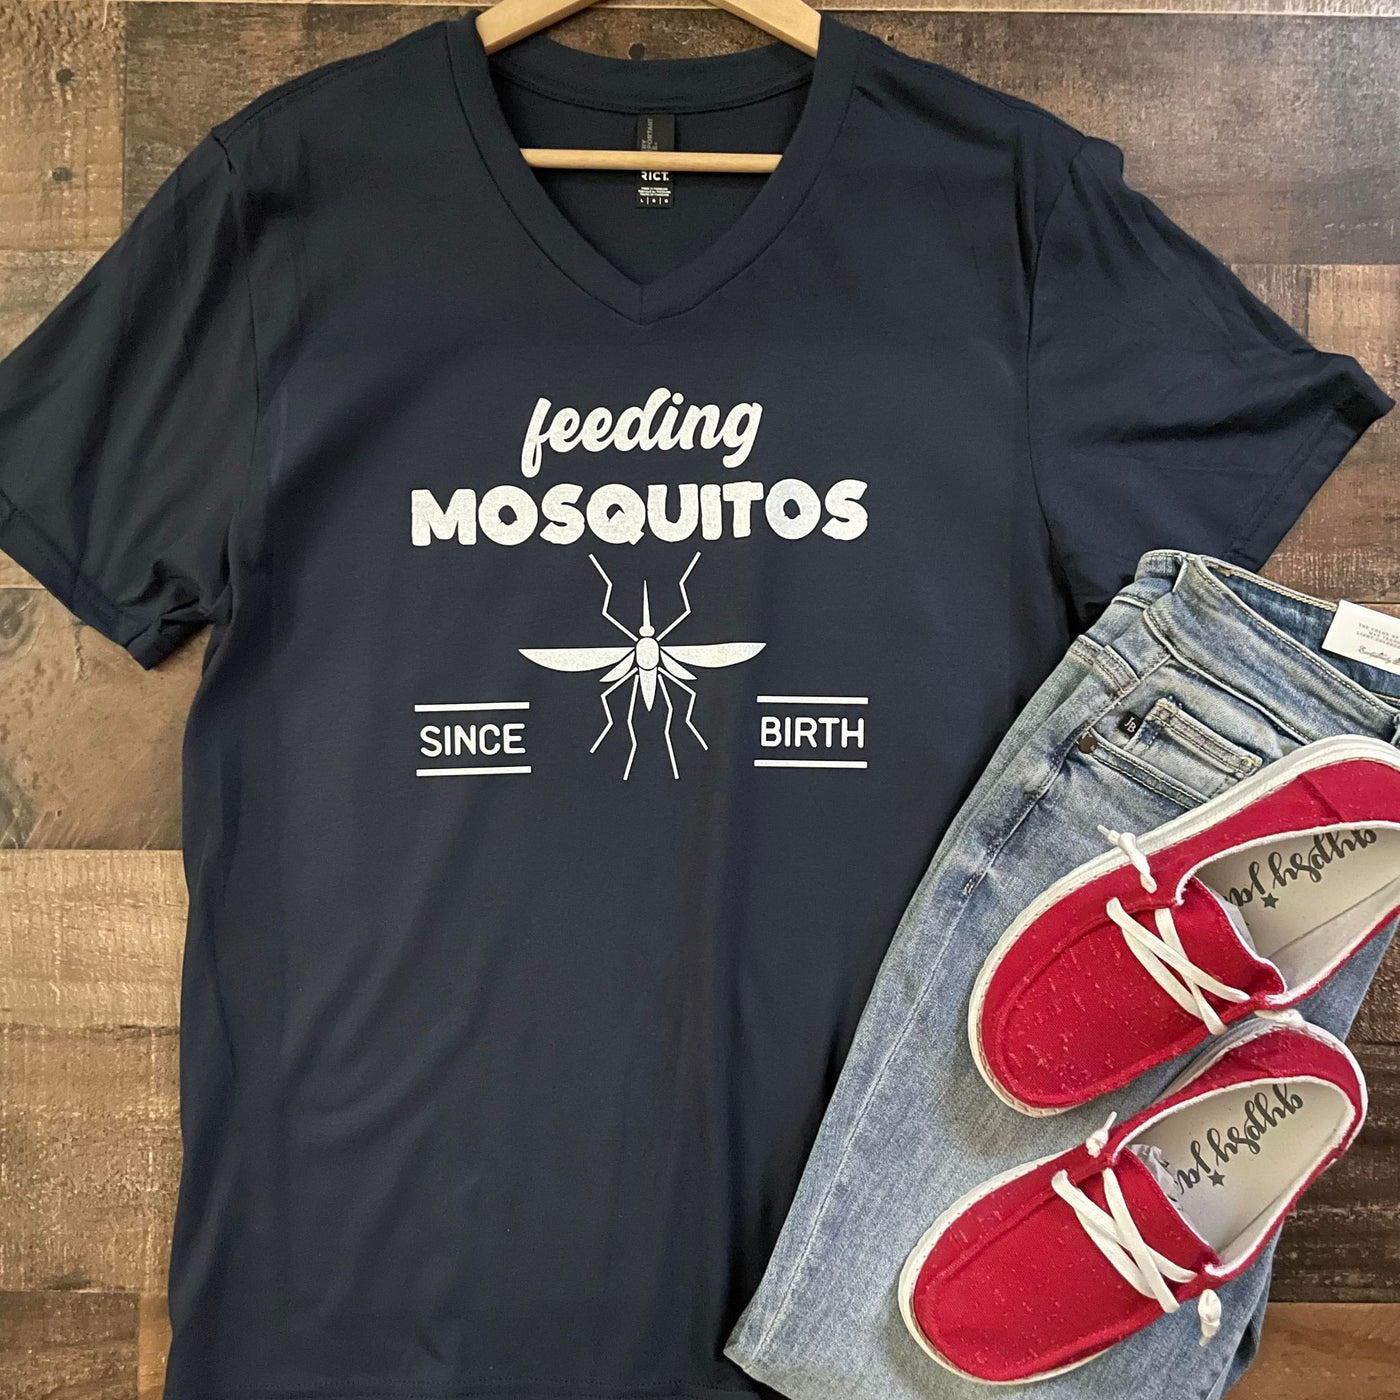 Feeding Mosquitos Since Birth Graphic Tee Shirt